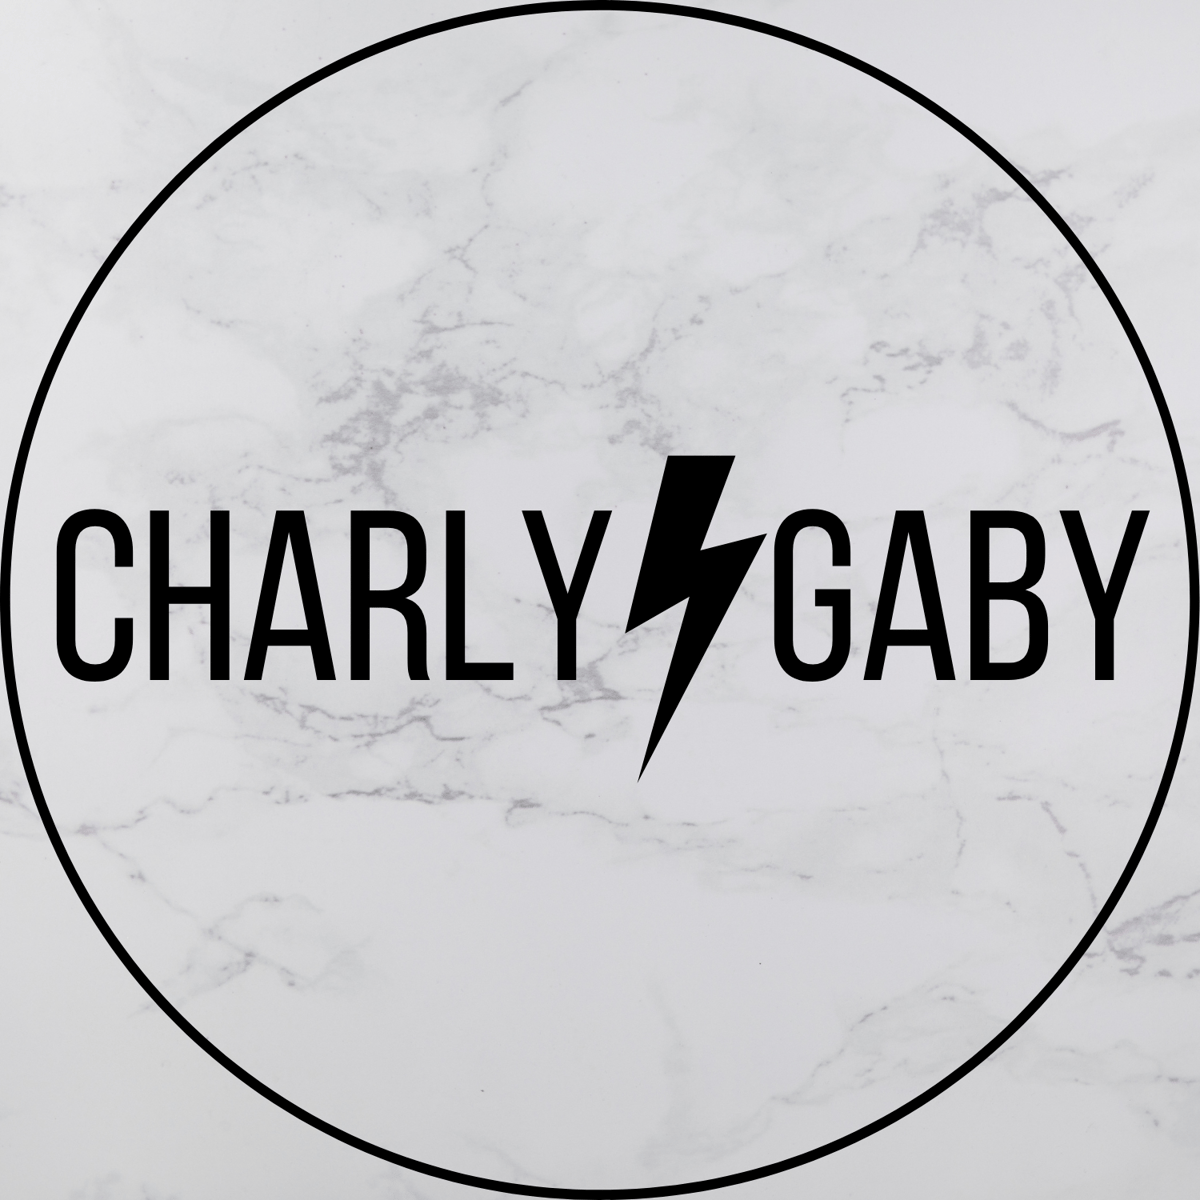 CHARLY # GABY